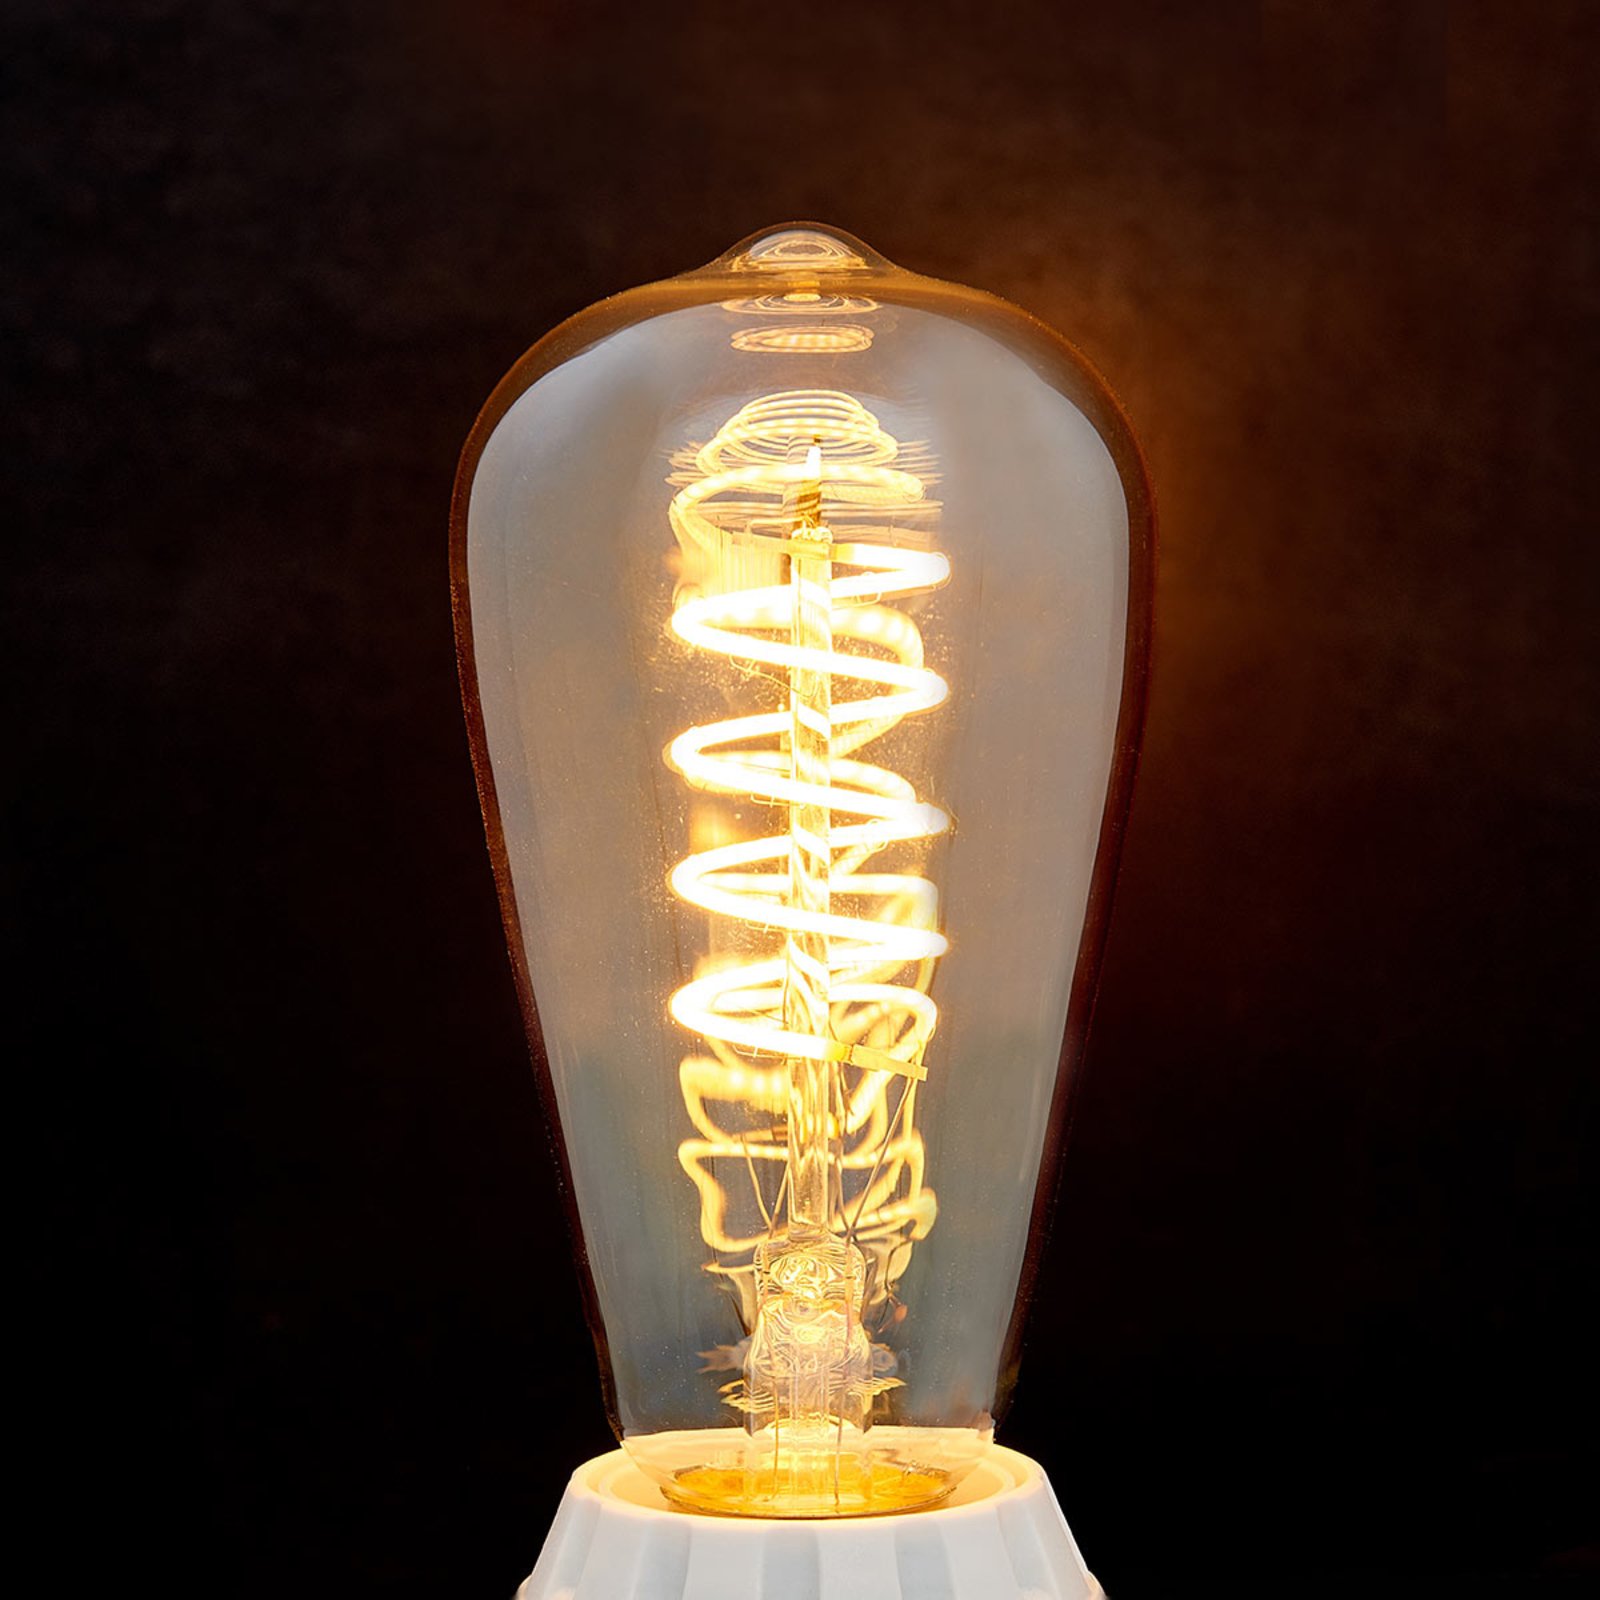 E27 LED rustic bulb Curved Line 4W, 1800K, amber